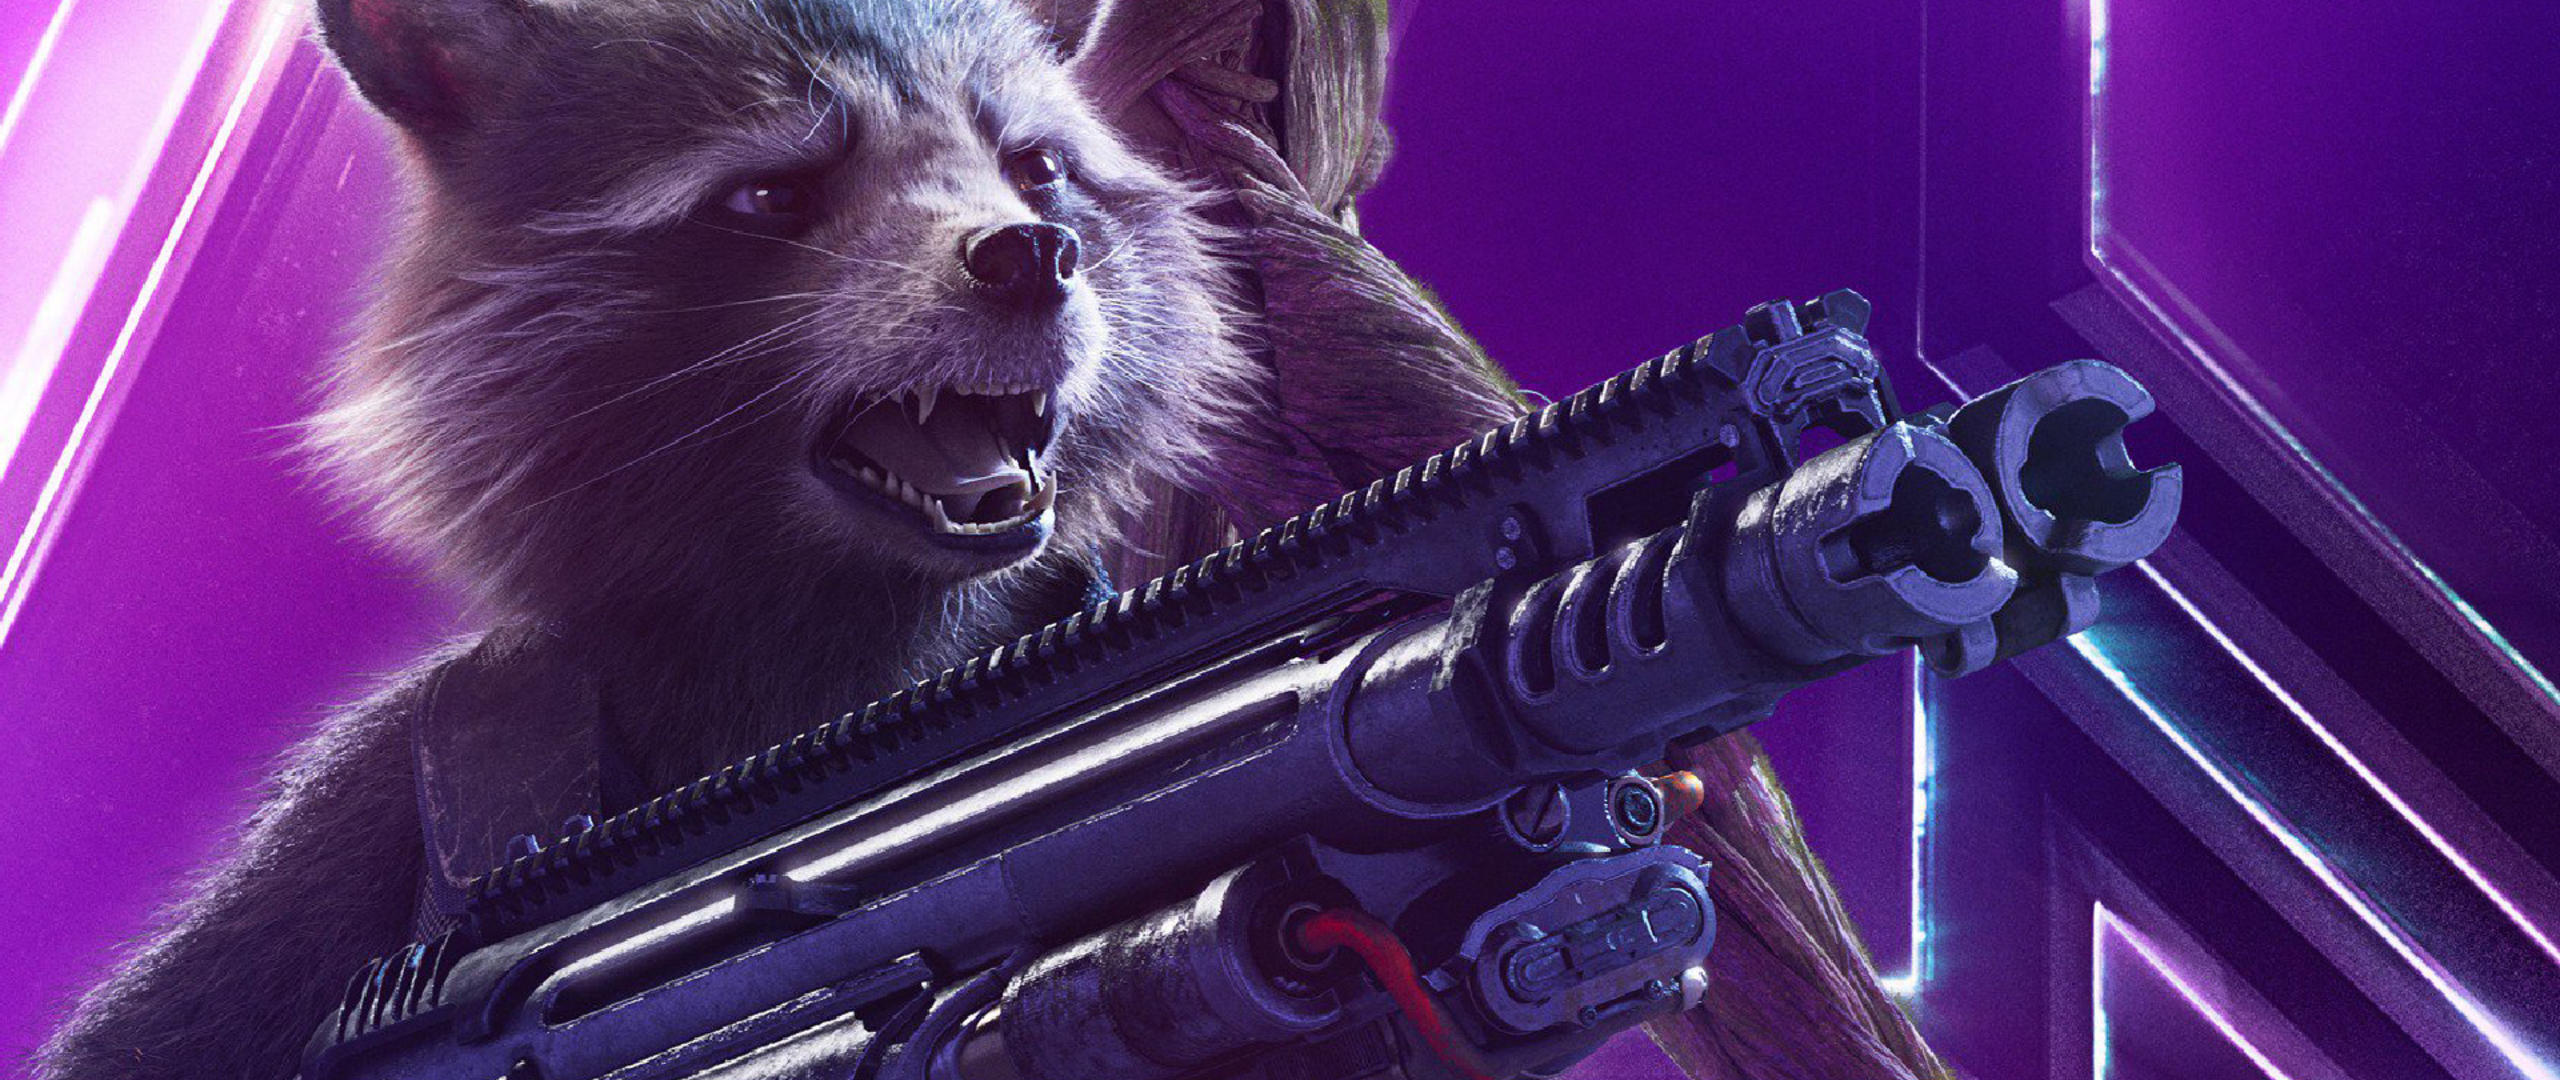 rocket-raccoon-in-avengers-infinity-war-new-poster-61-2560x1080.jpg